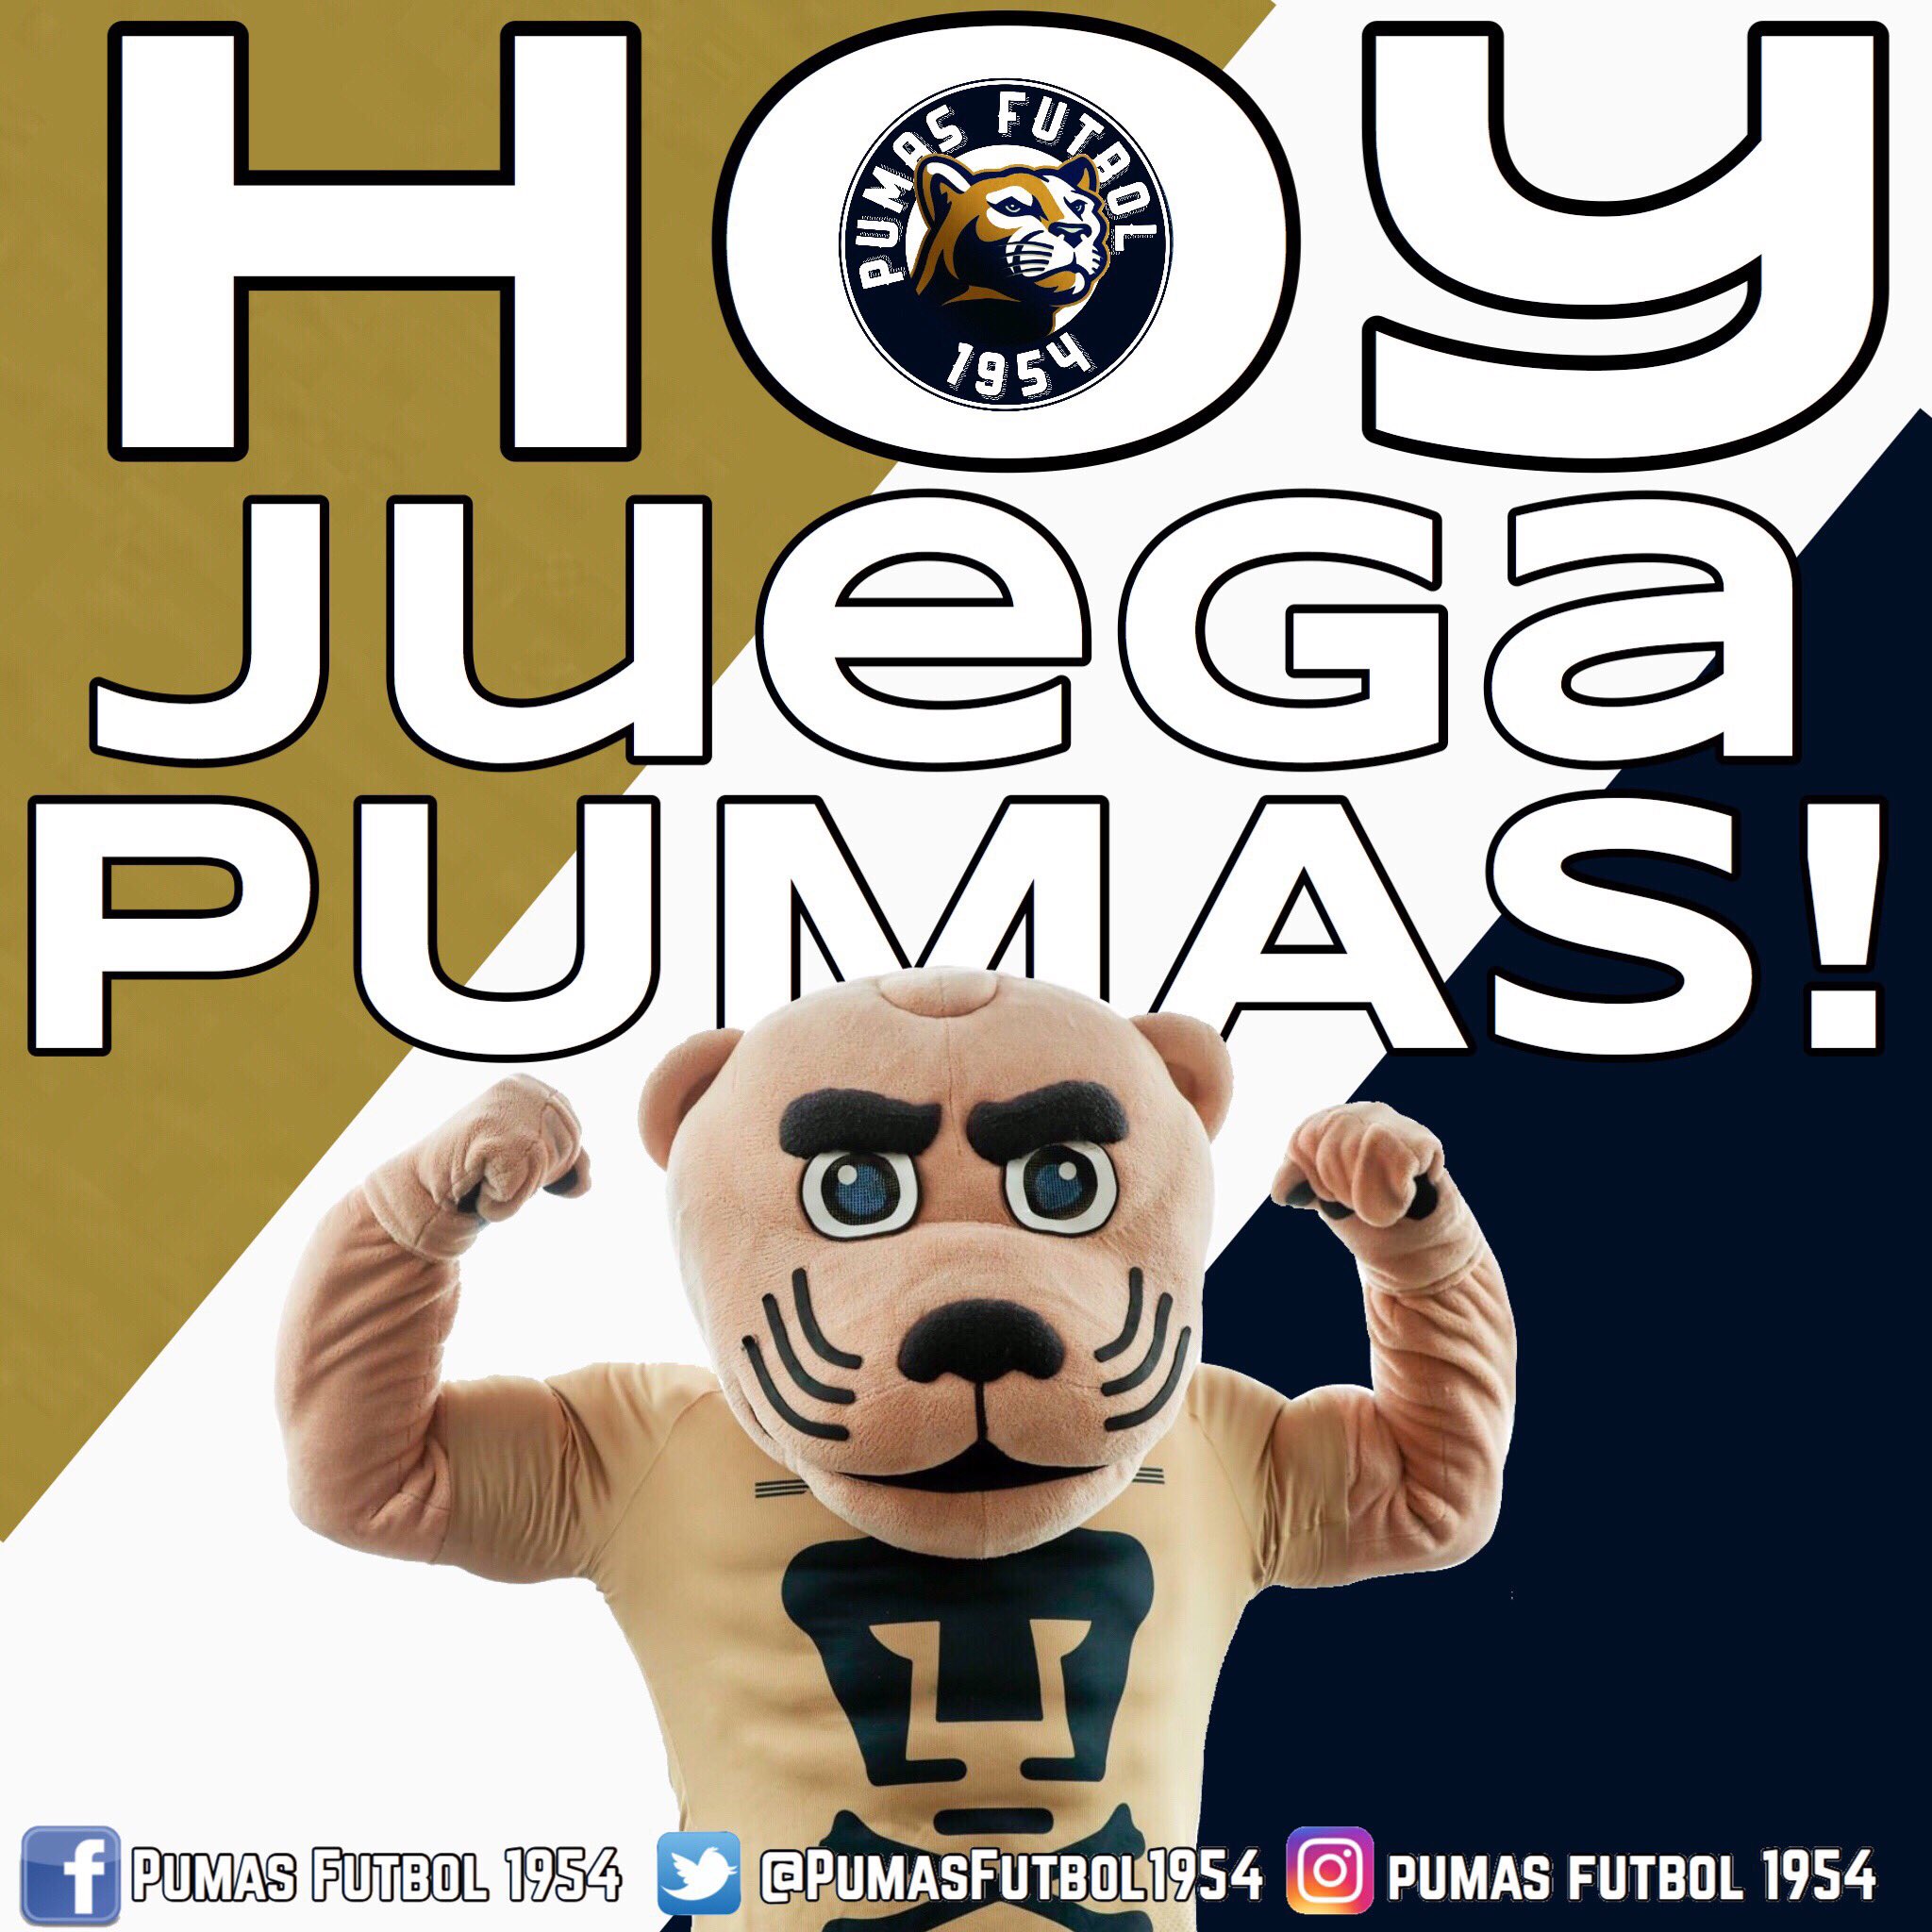 Pumas Futbol 1954 on Twitter: "HOY JUEGA PUMAS!!! Mazatlan Fc Vs PUMAS 🏟 Mazatlan ⏰21:00 🖥 Azteca 7 #SoyDePumas https://t.co/rP2thiNRgT" /